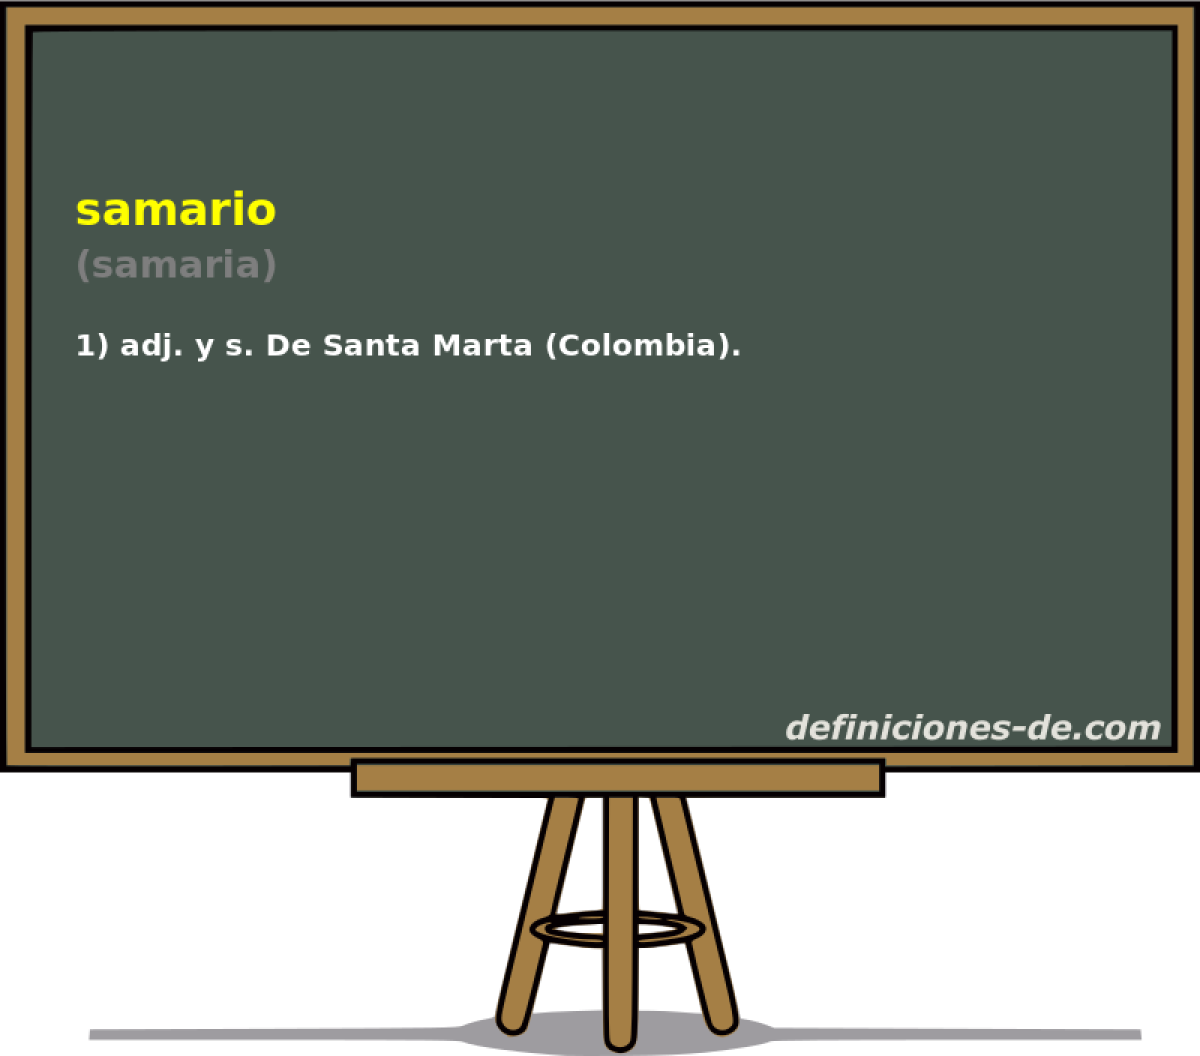 samario (samaria)